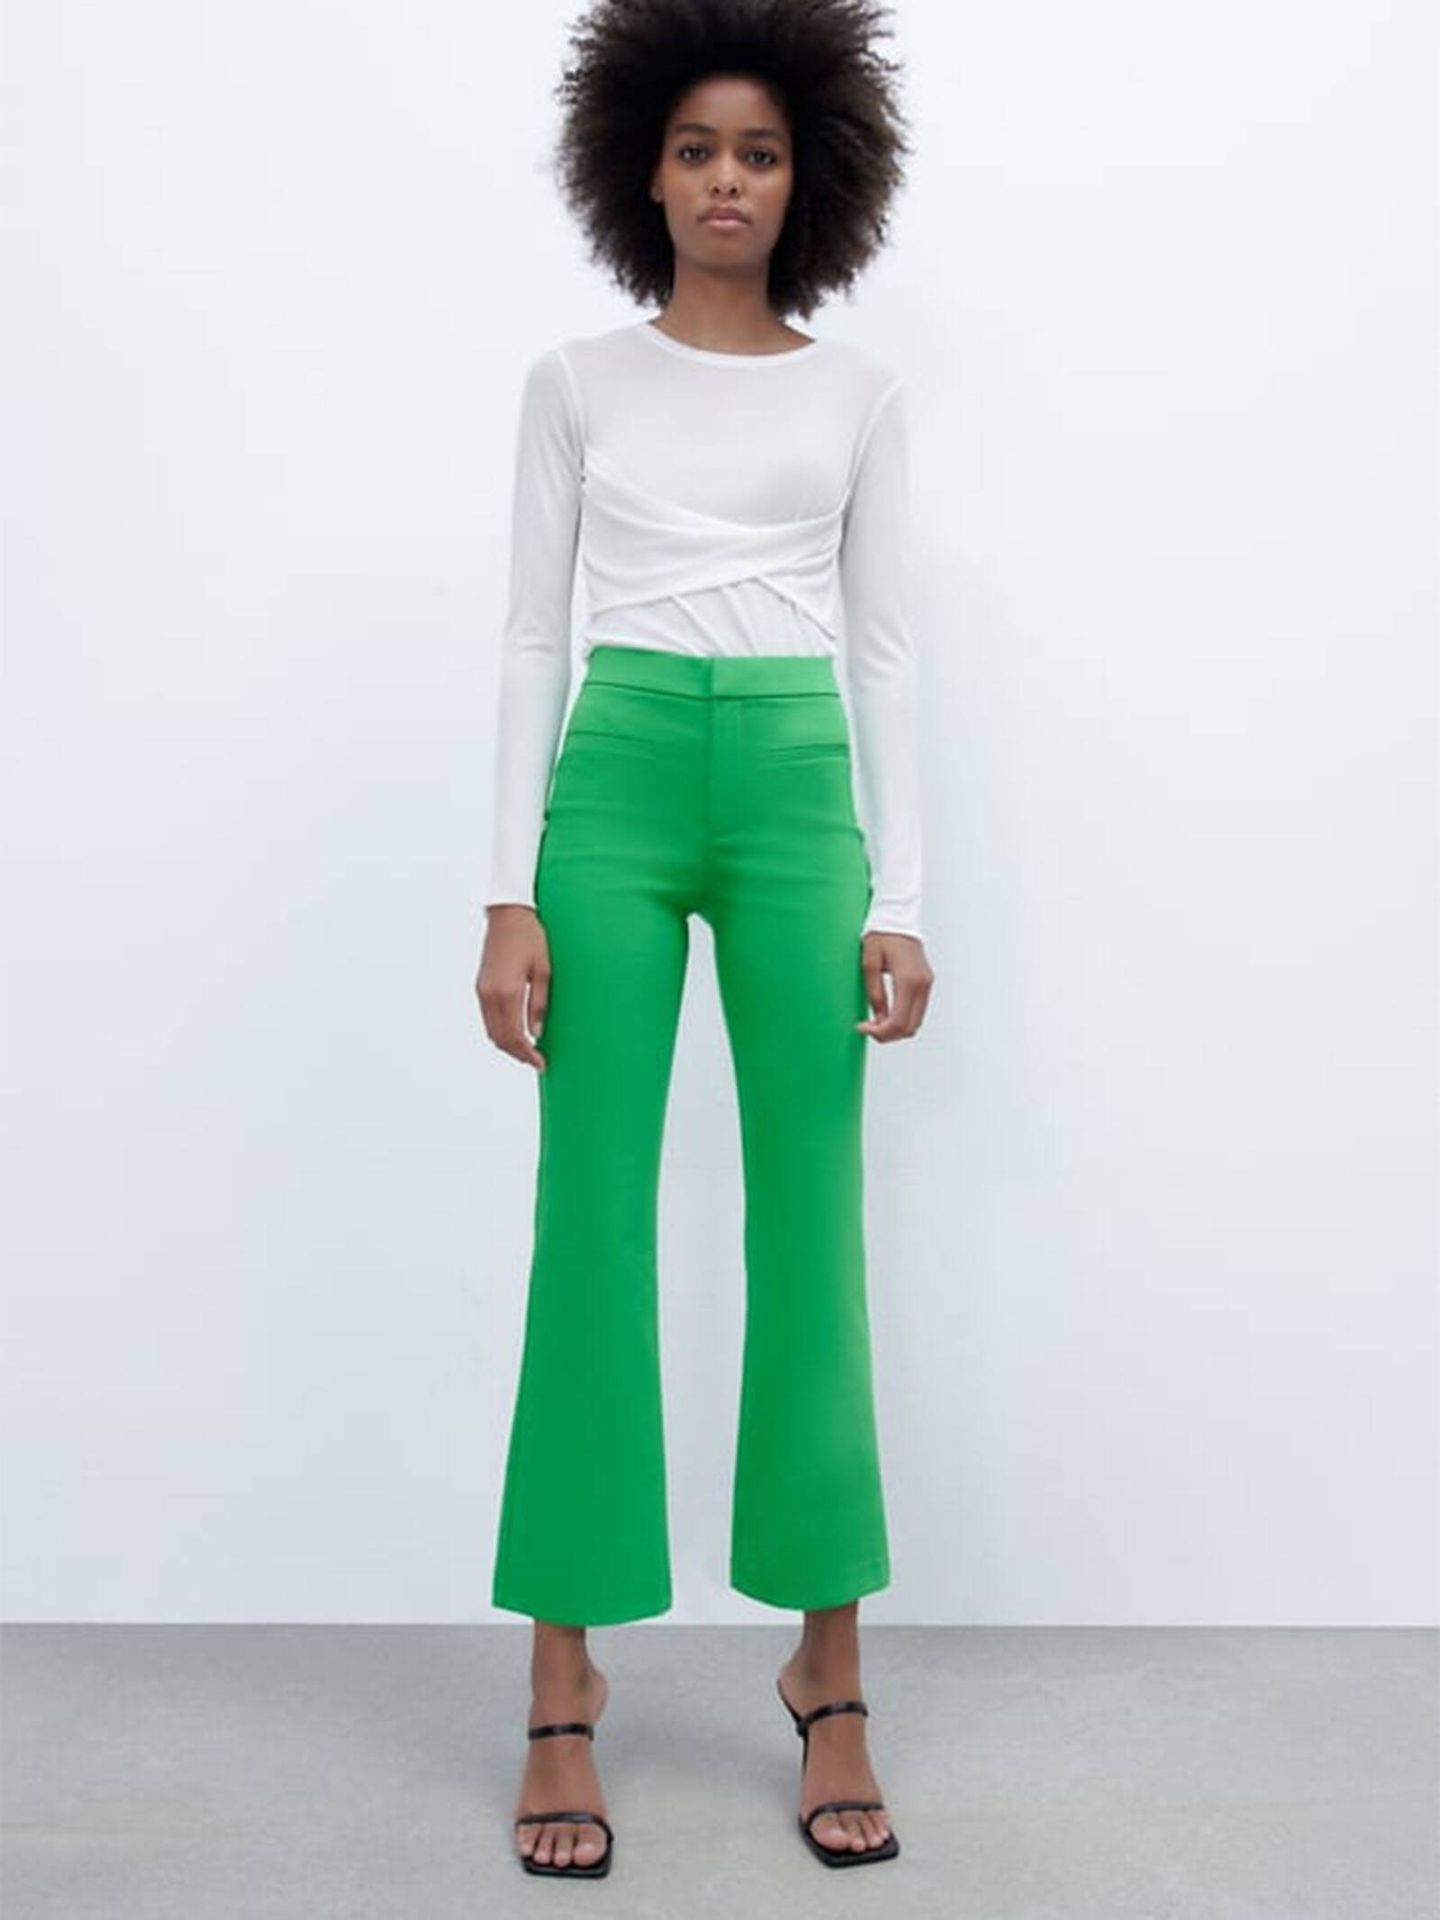 Favorecedor, cómodo y de tendencia: pantalón de Zara que todas desean